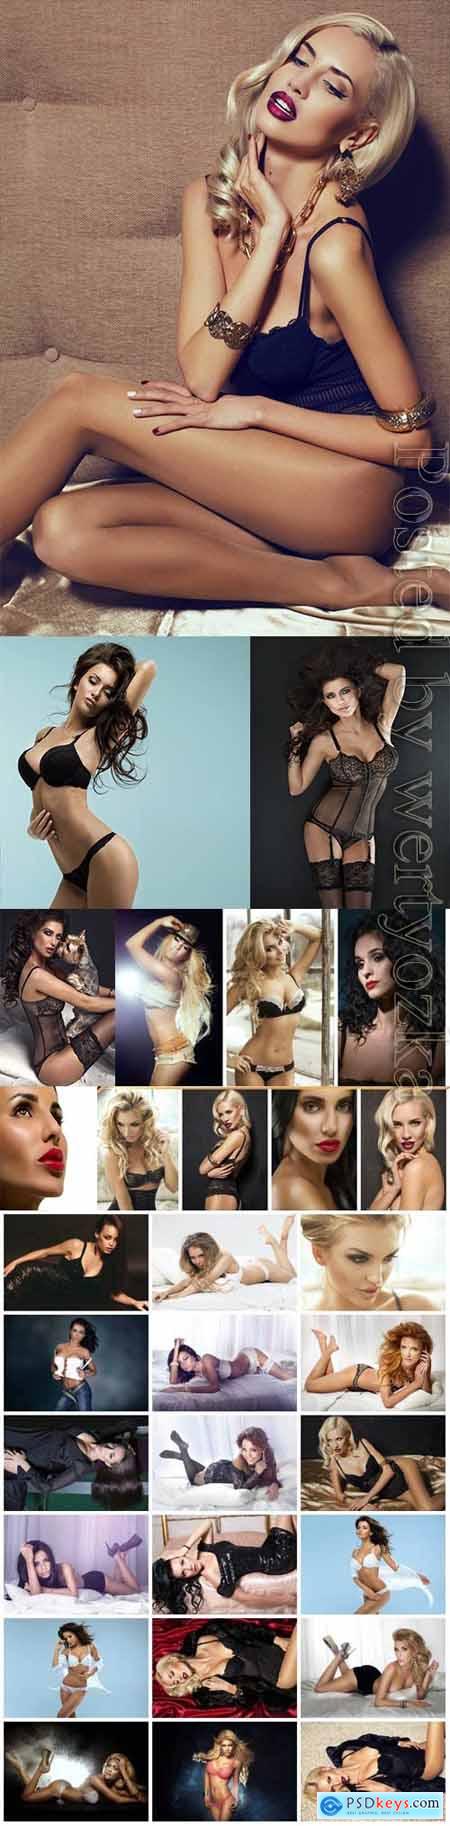 Luxury women in lingerie posing stock photo vol 20